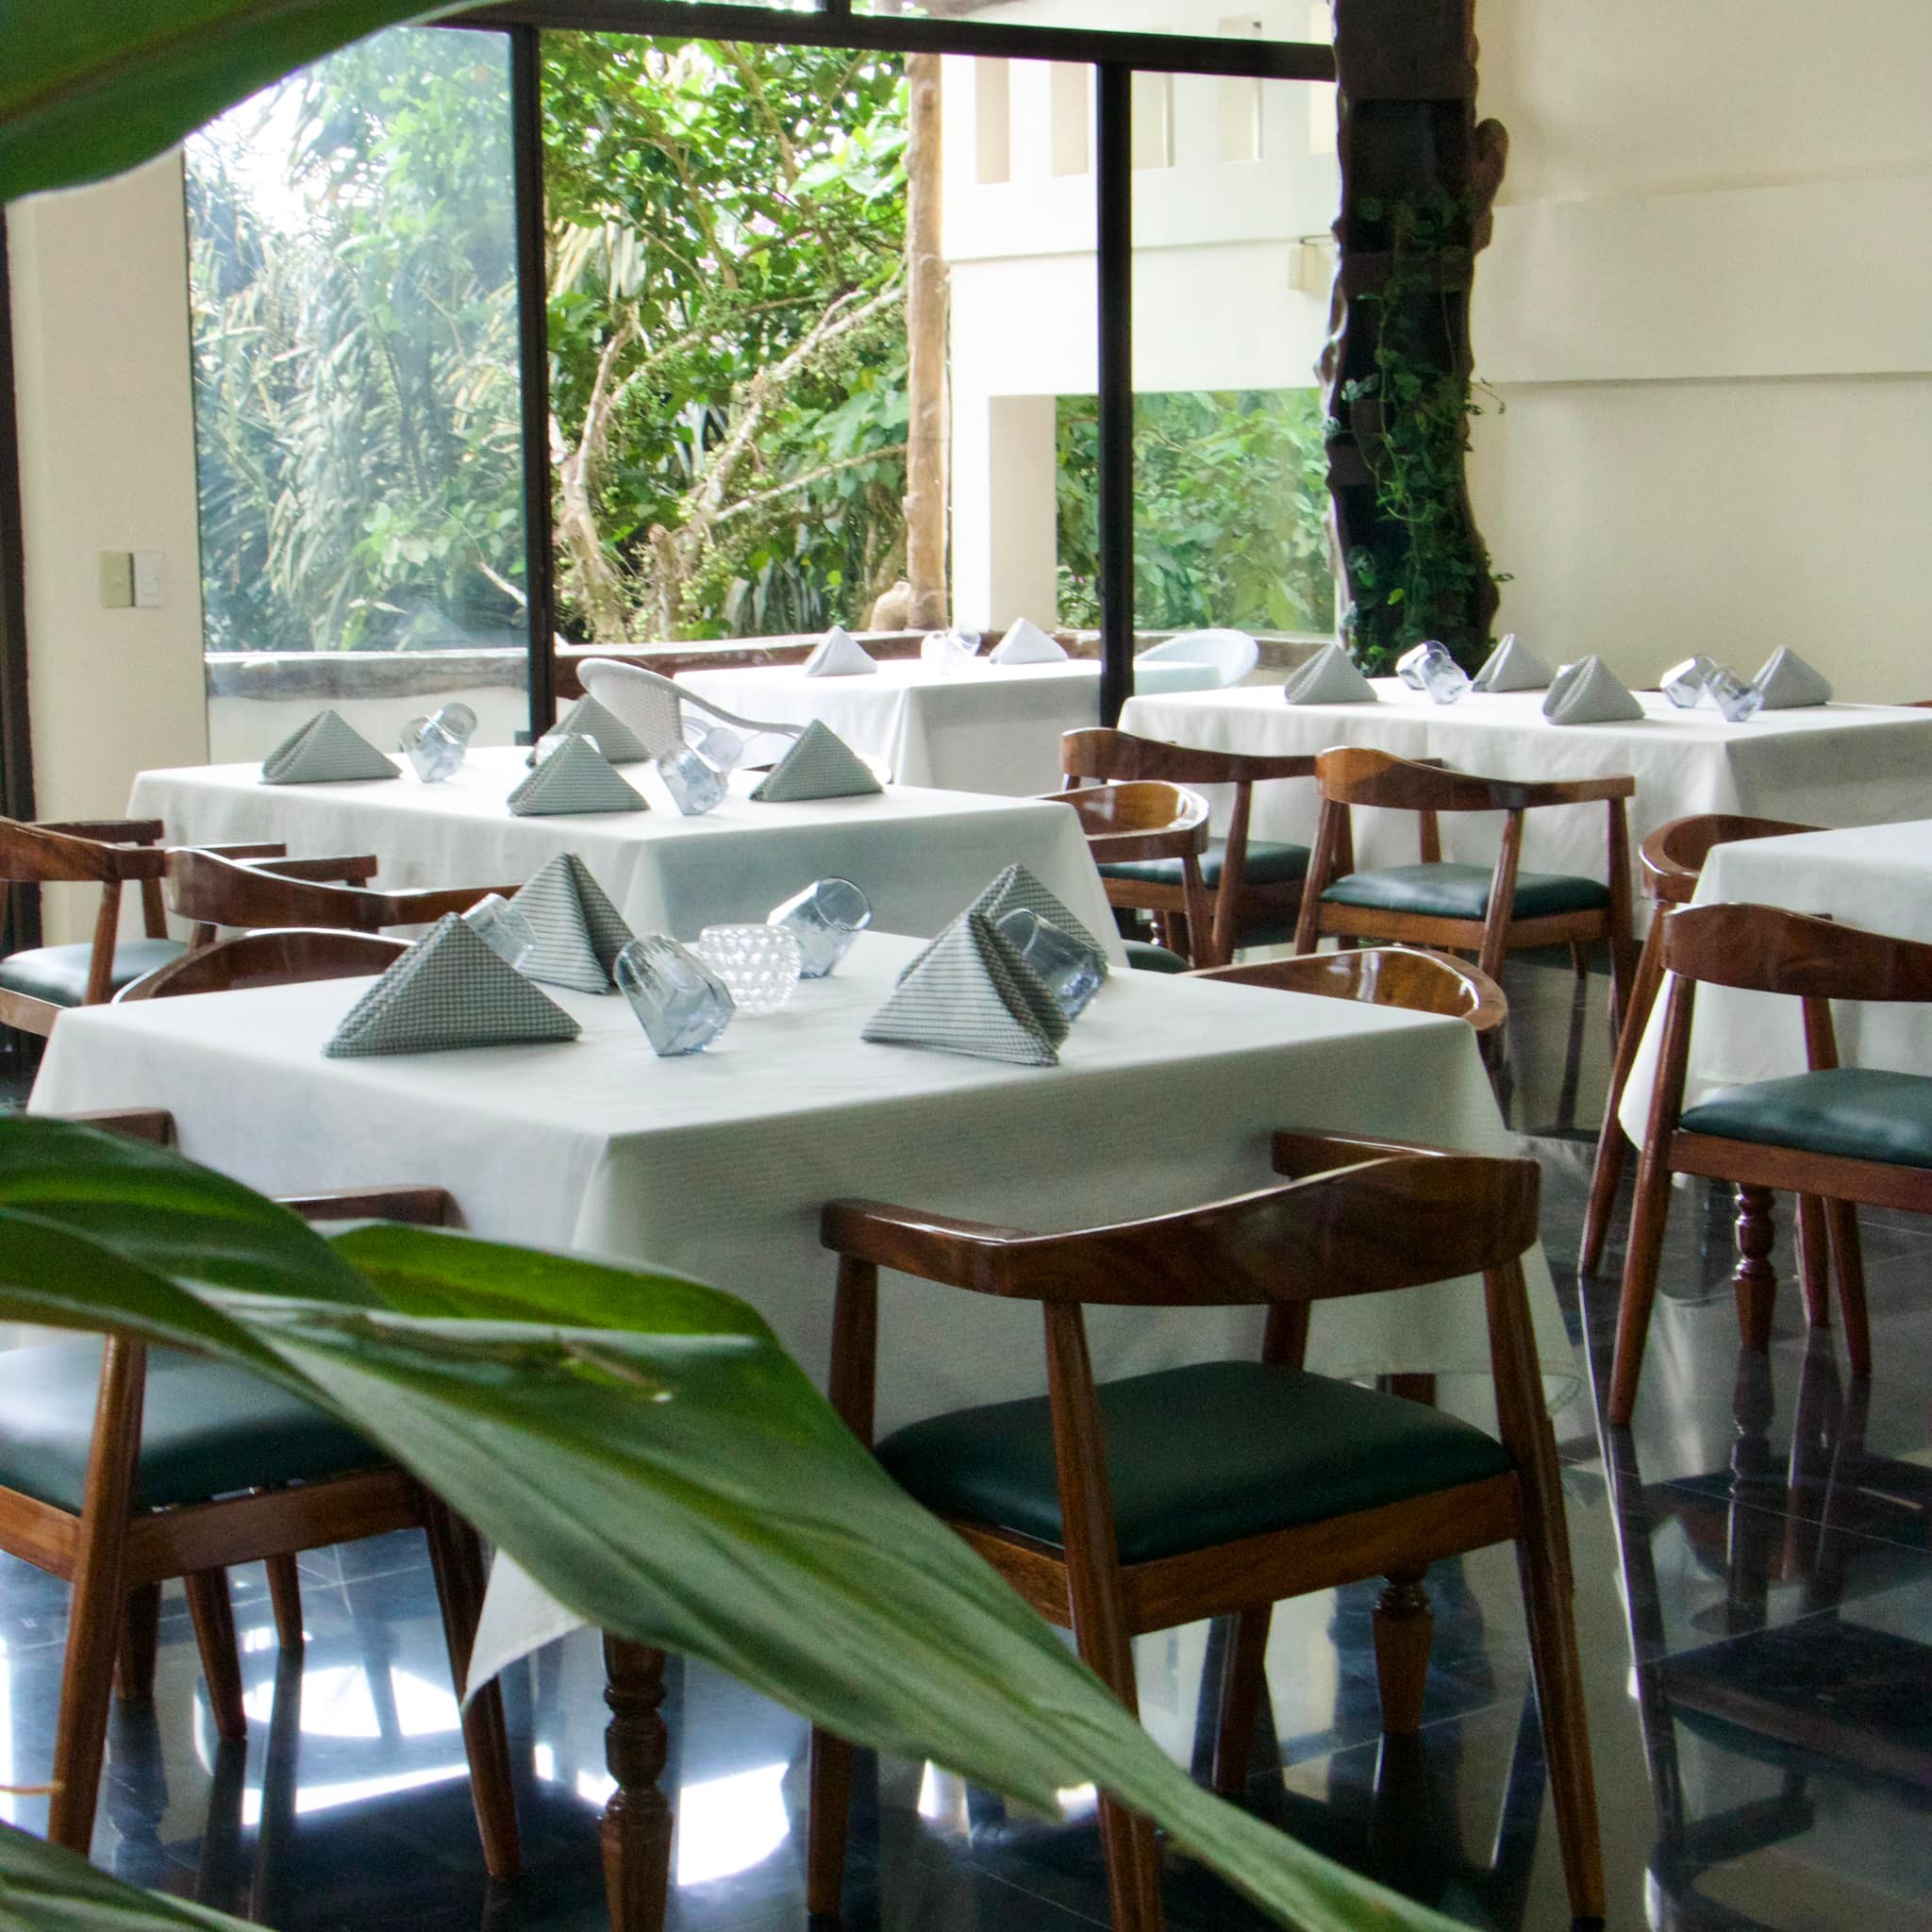 Prism Restaurant Cafe in Batangas - elegant wood and greenery interior